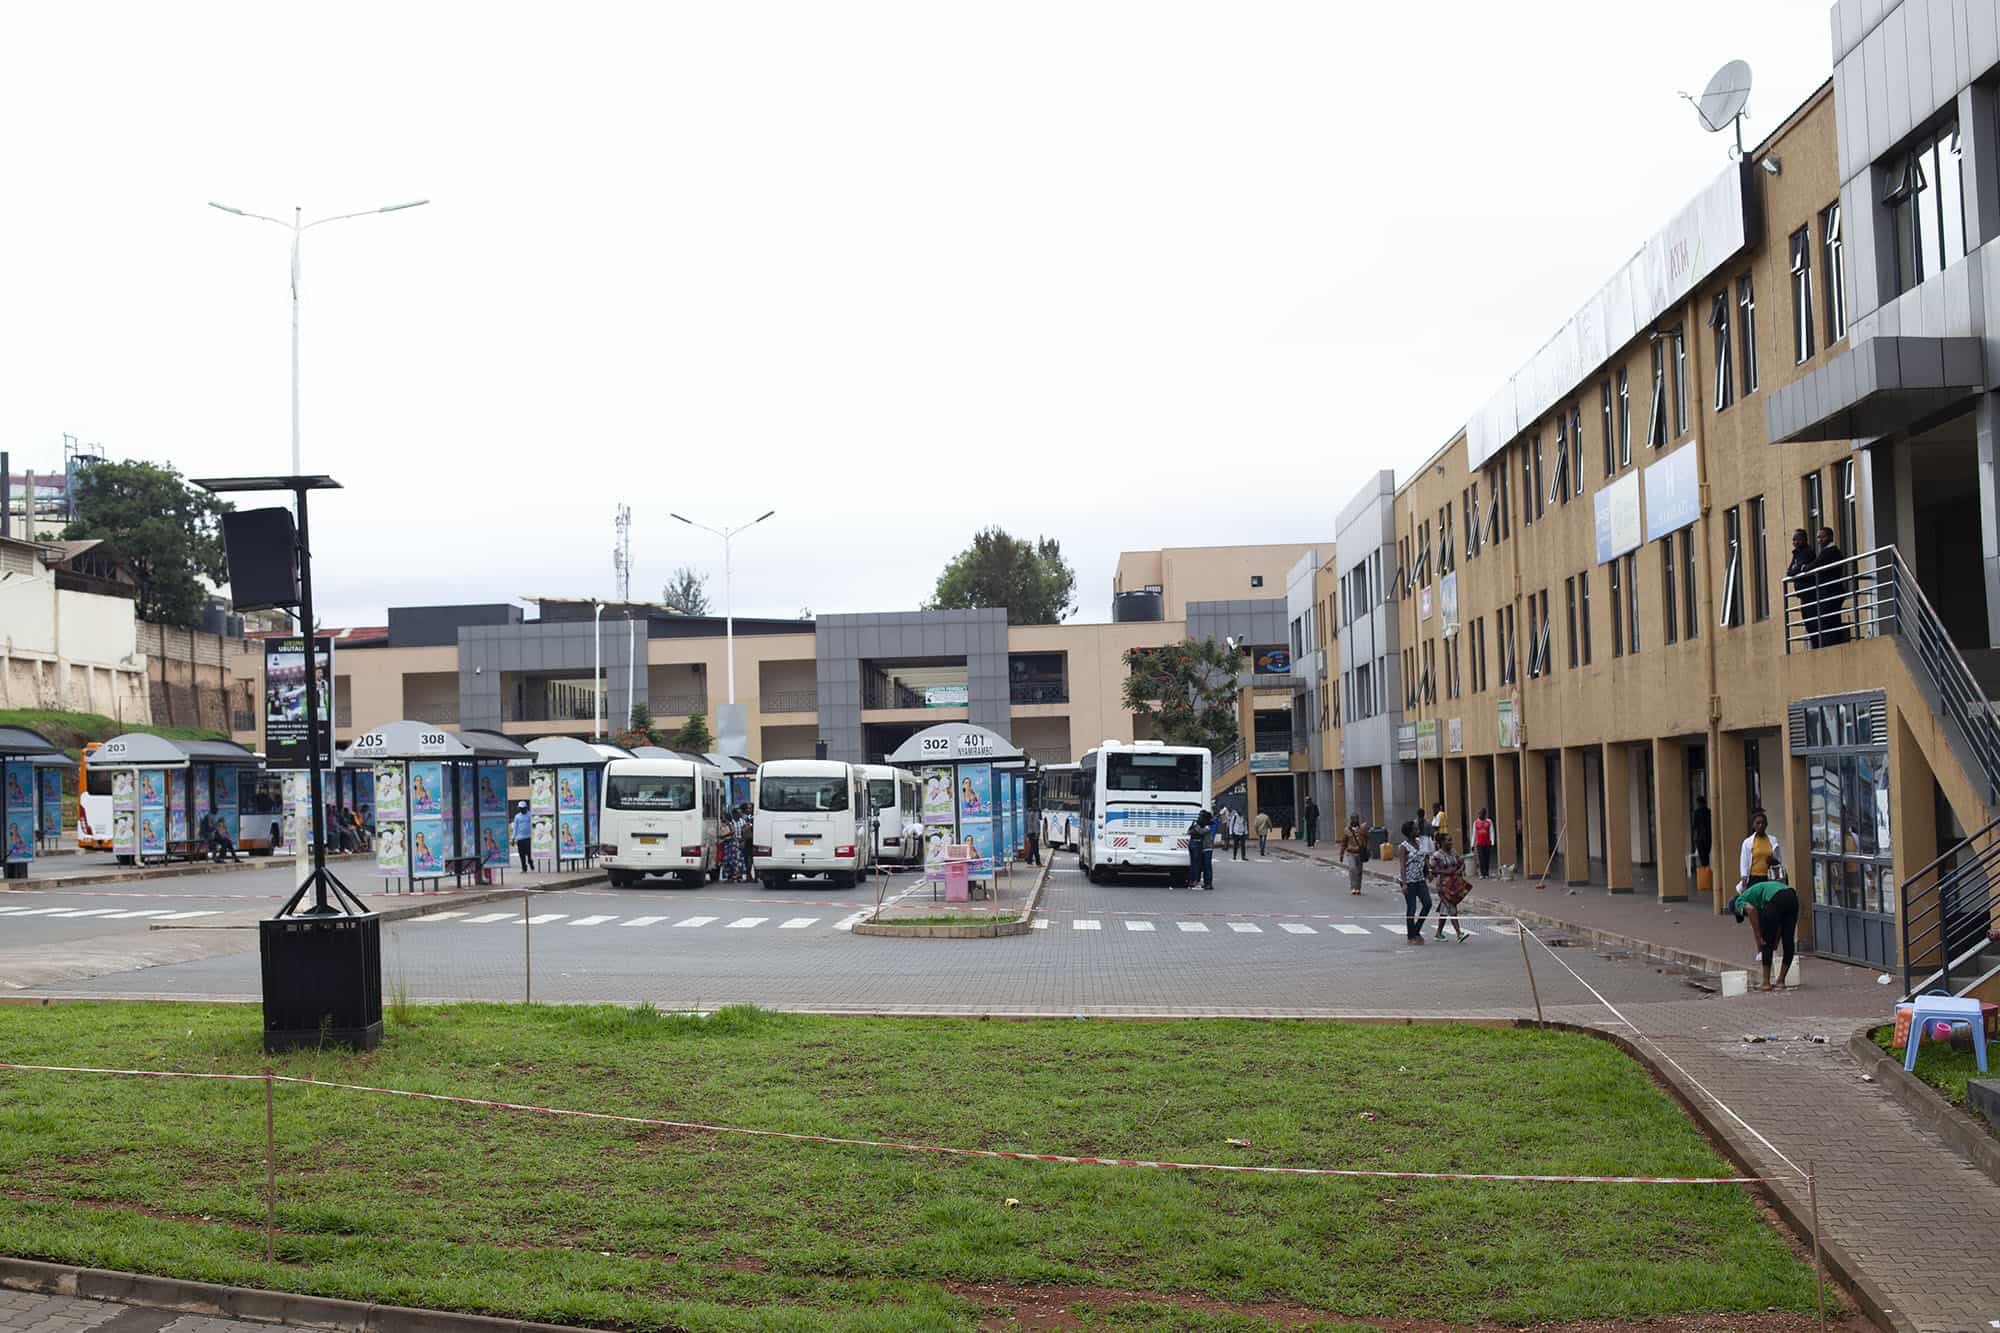 Modern Bus Park CBD, Kigali (TOD Pilot)